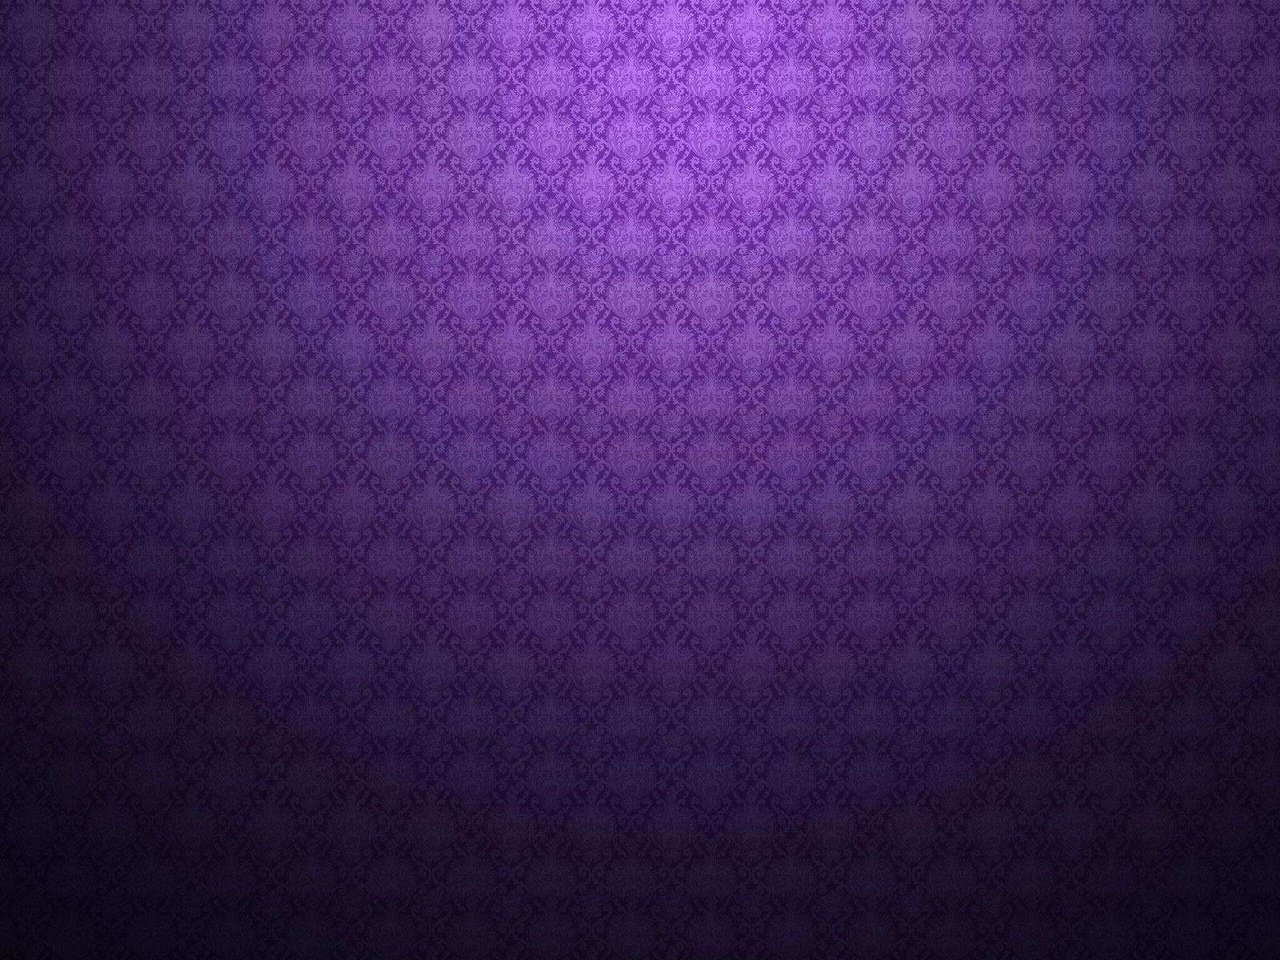 Темно-фиолетовый фон с узорами